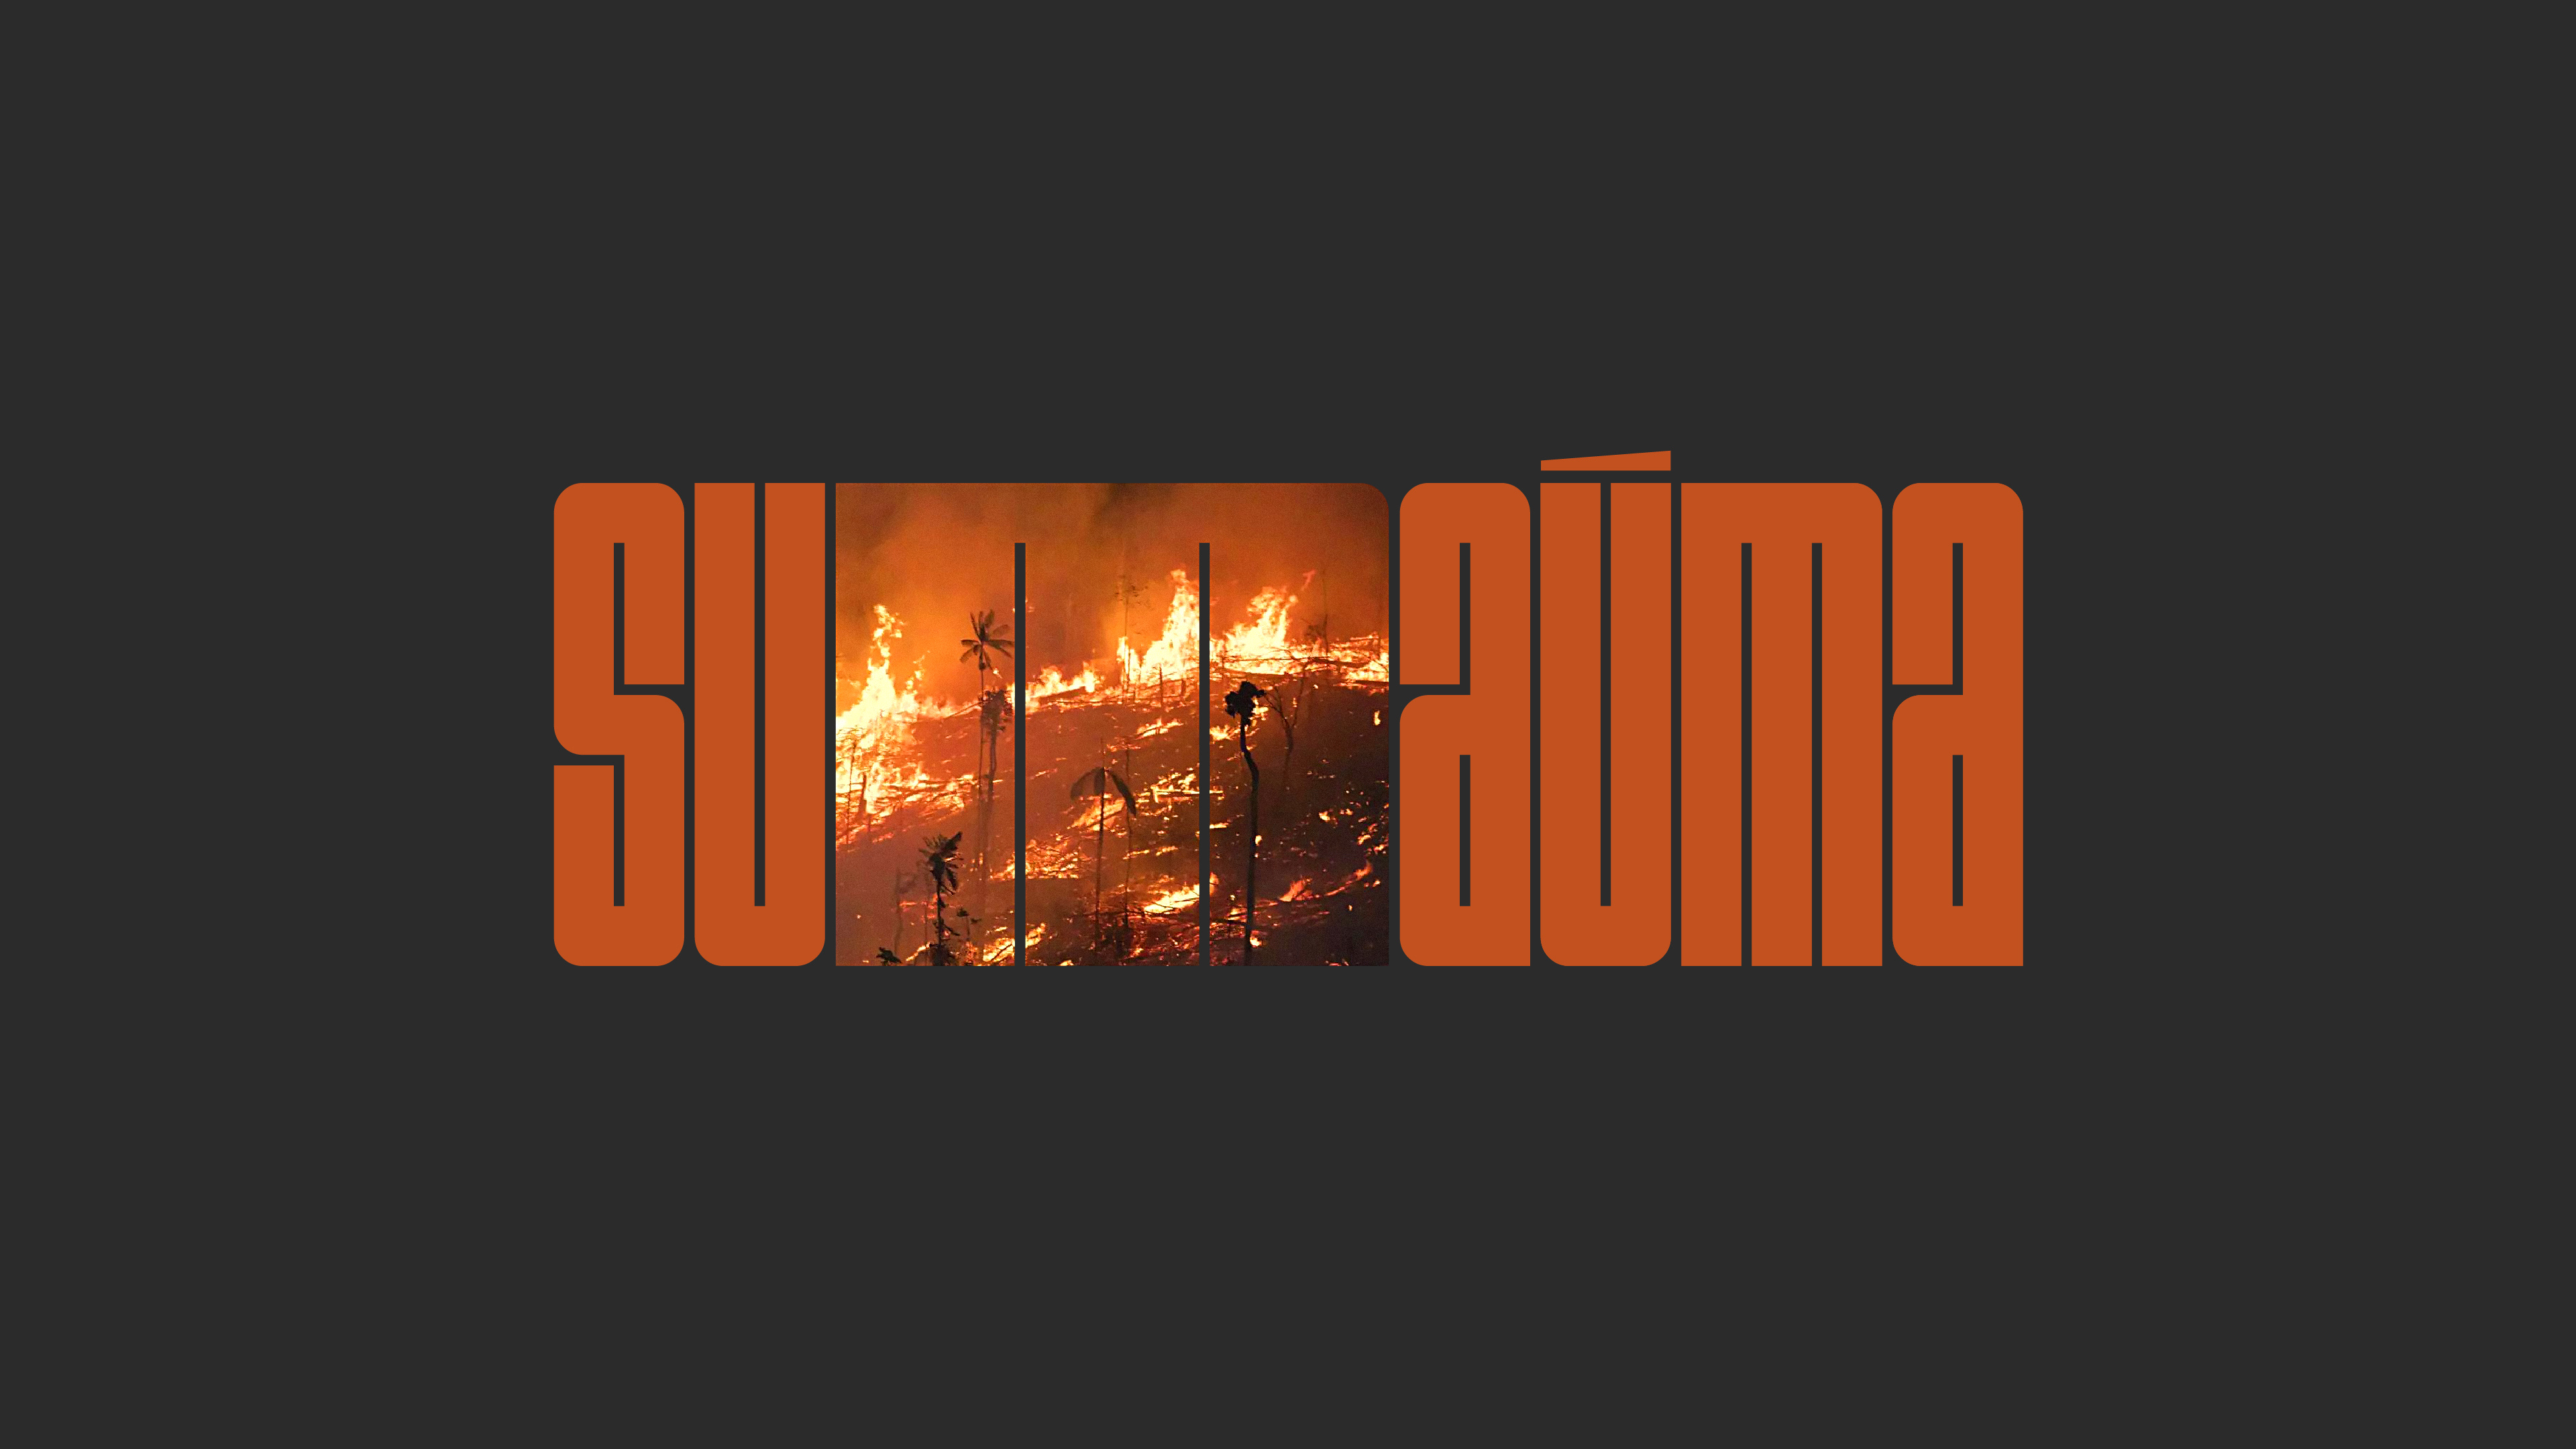 Sumauma - giving a voice to the Amazon Rainforest